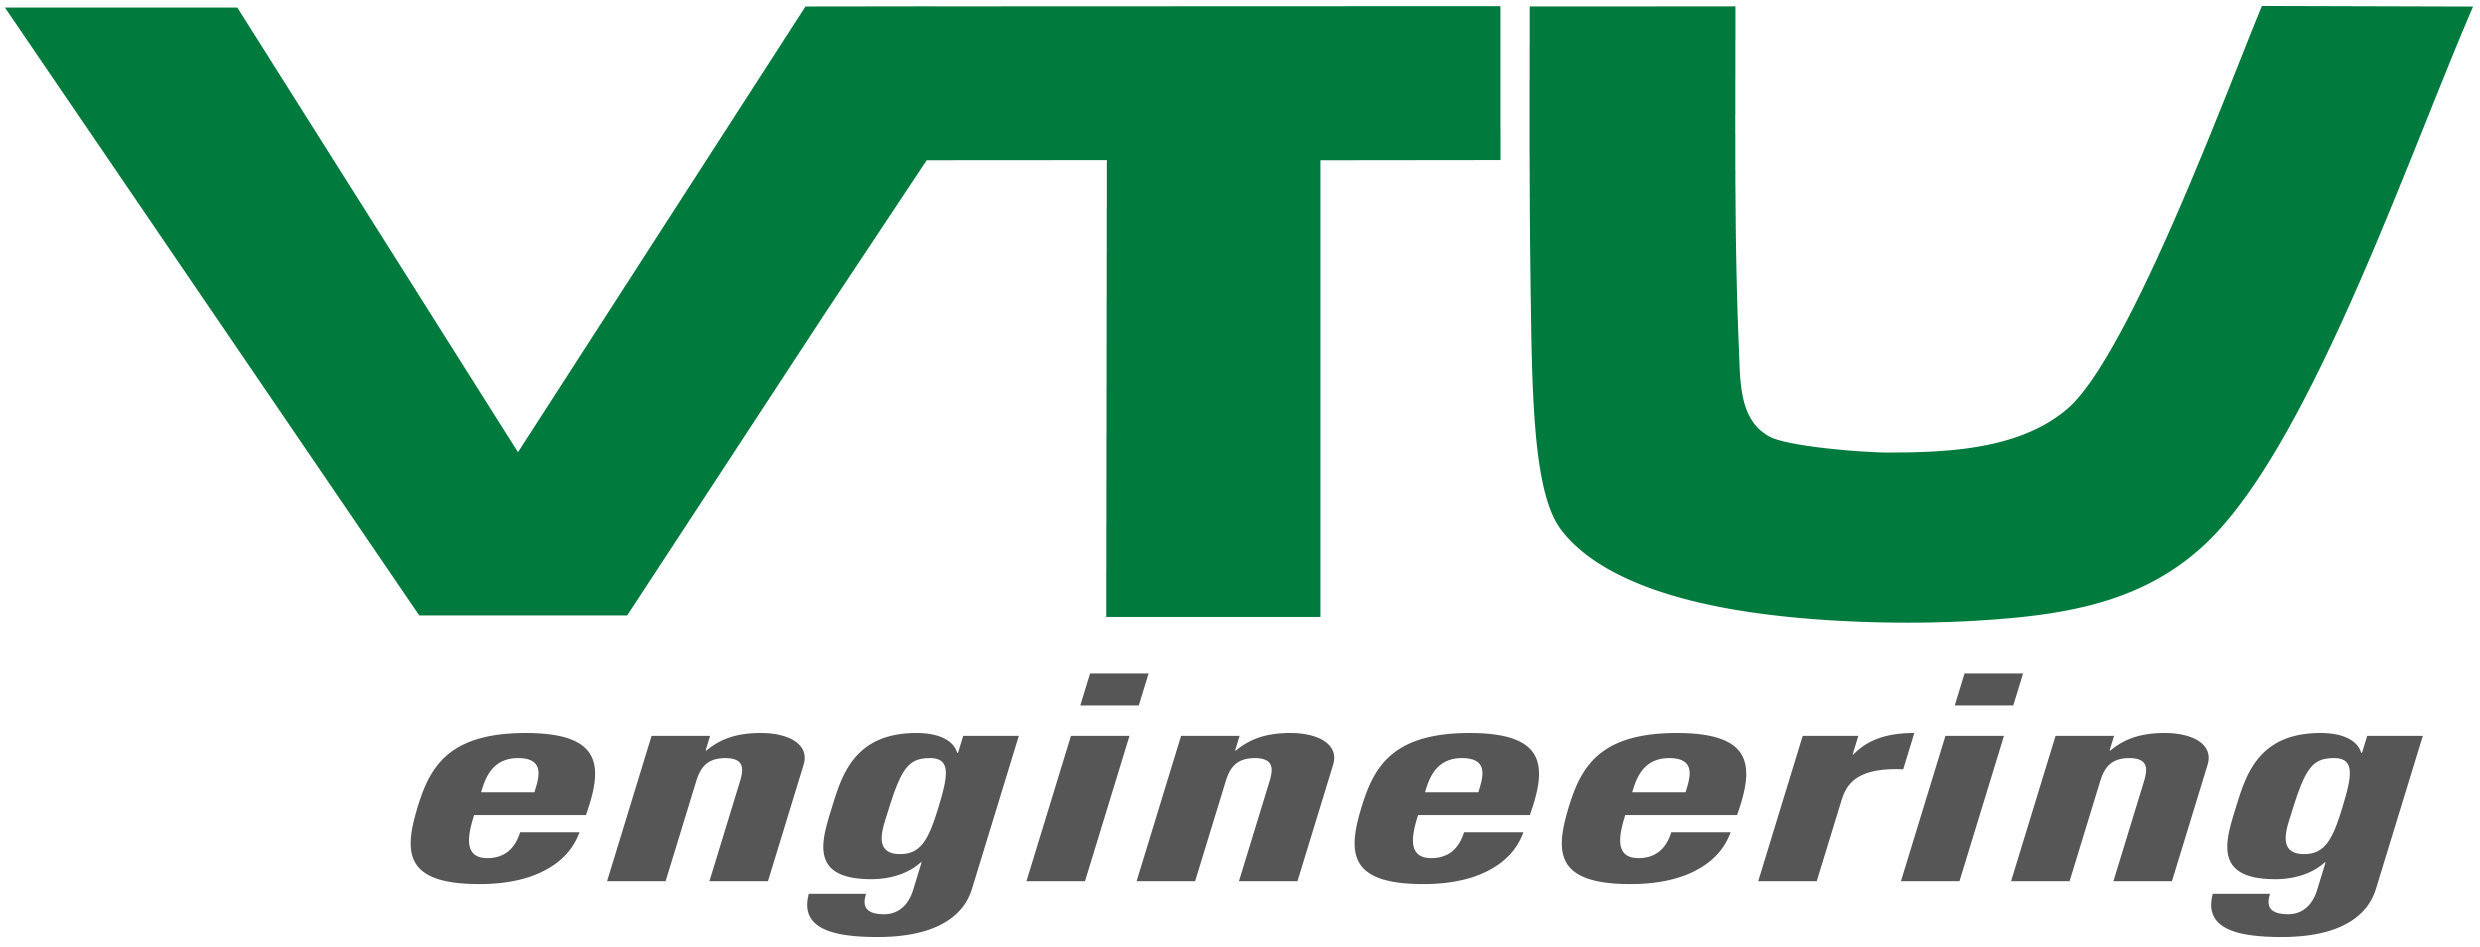 Traum_VTU engineering rgb gross.png